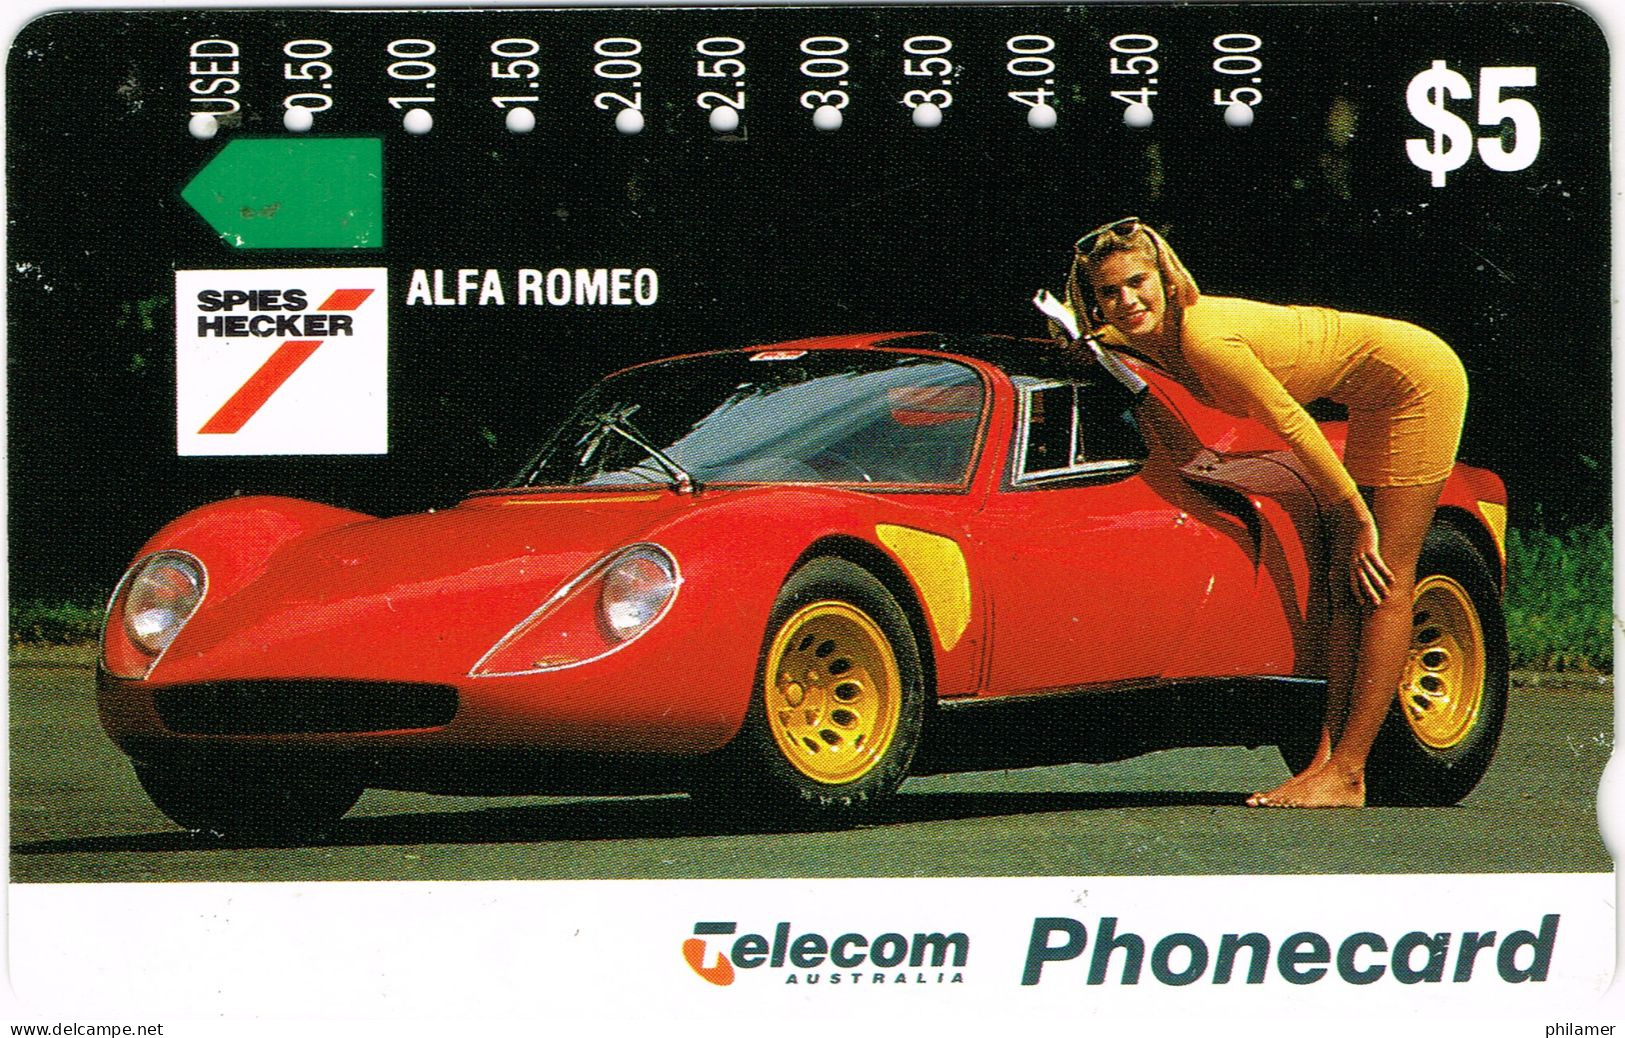 Australie Australia Telecarte Phonecard Carte A Trous Privee Spies Hecker Alfa Romeo Voiture Car 5$ UT  BE - Australien